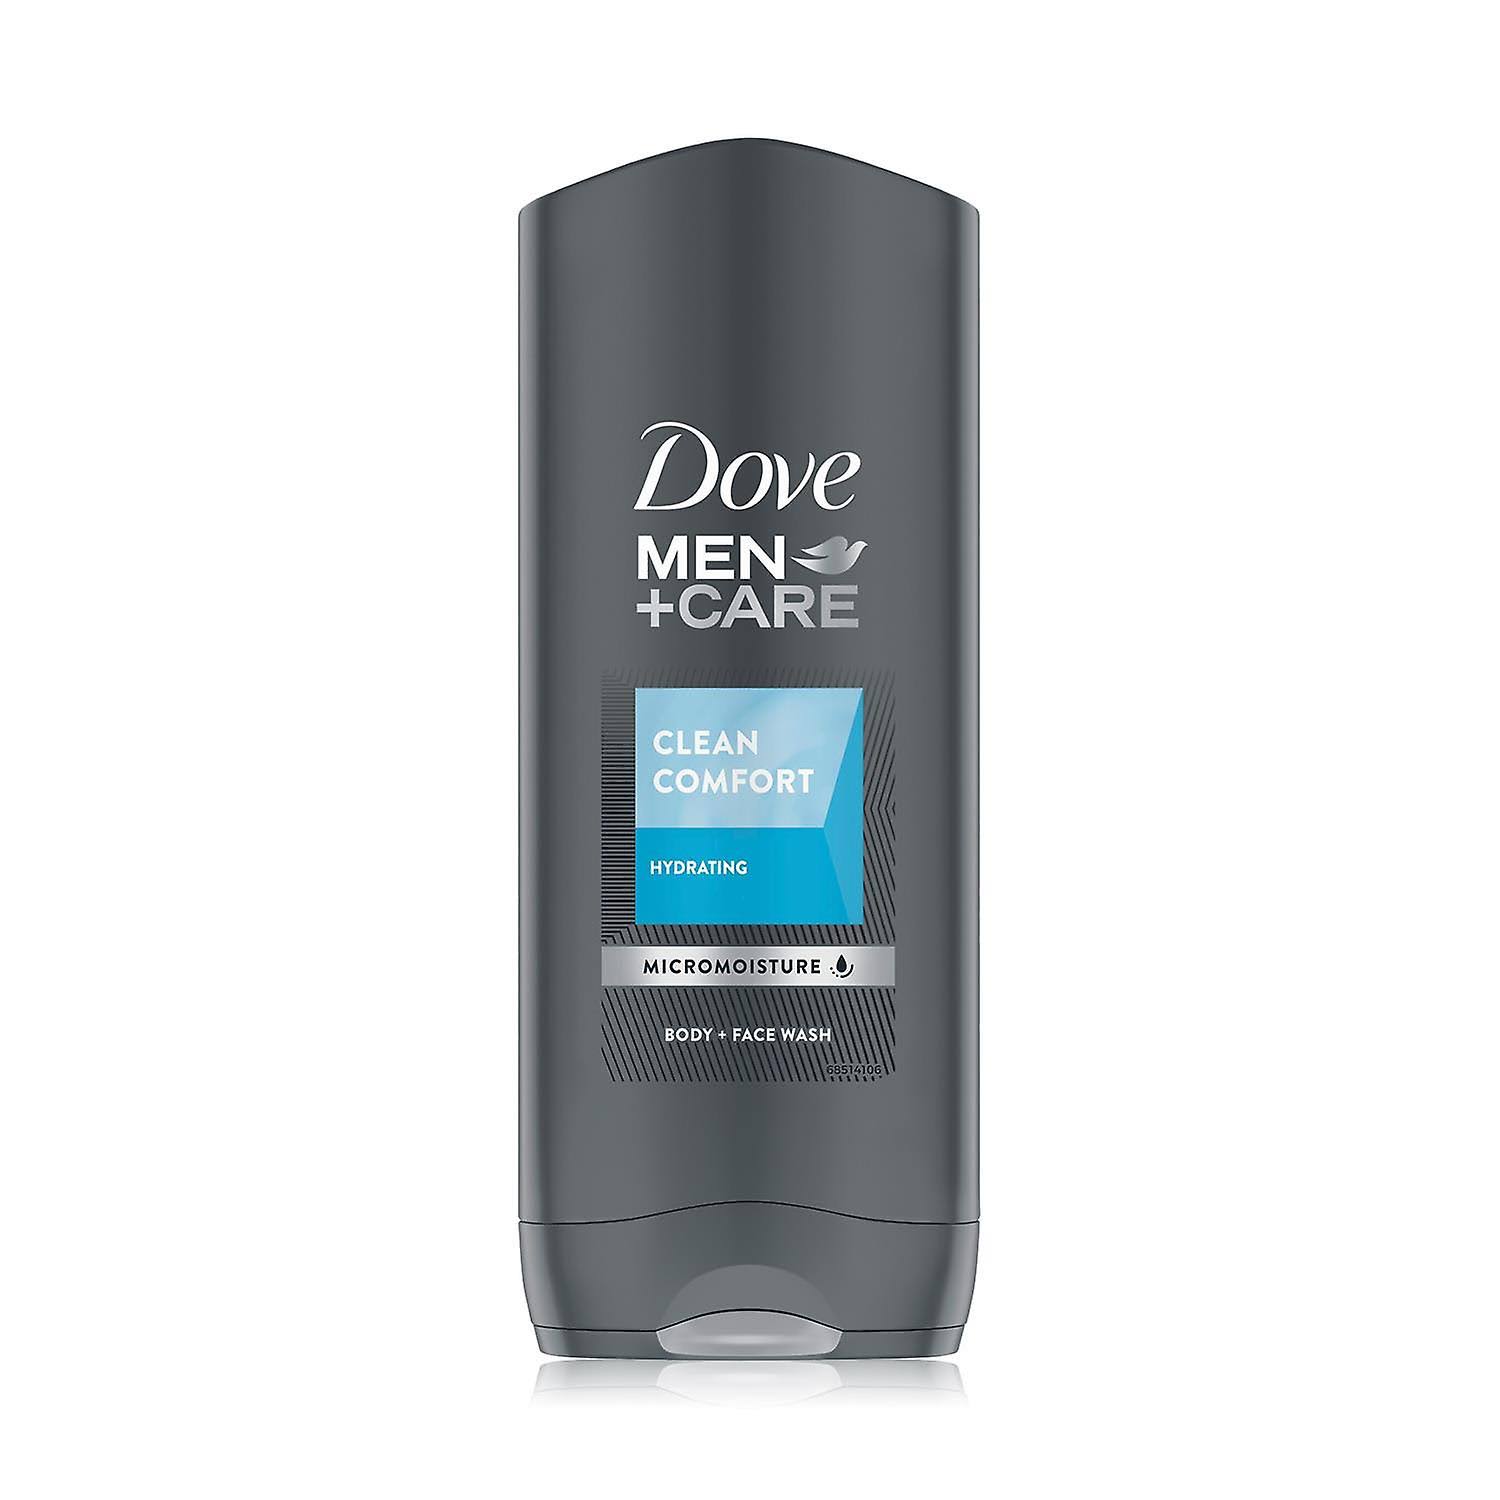 Dove Men Care Clean Comfort Body wash - 400ml